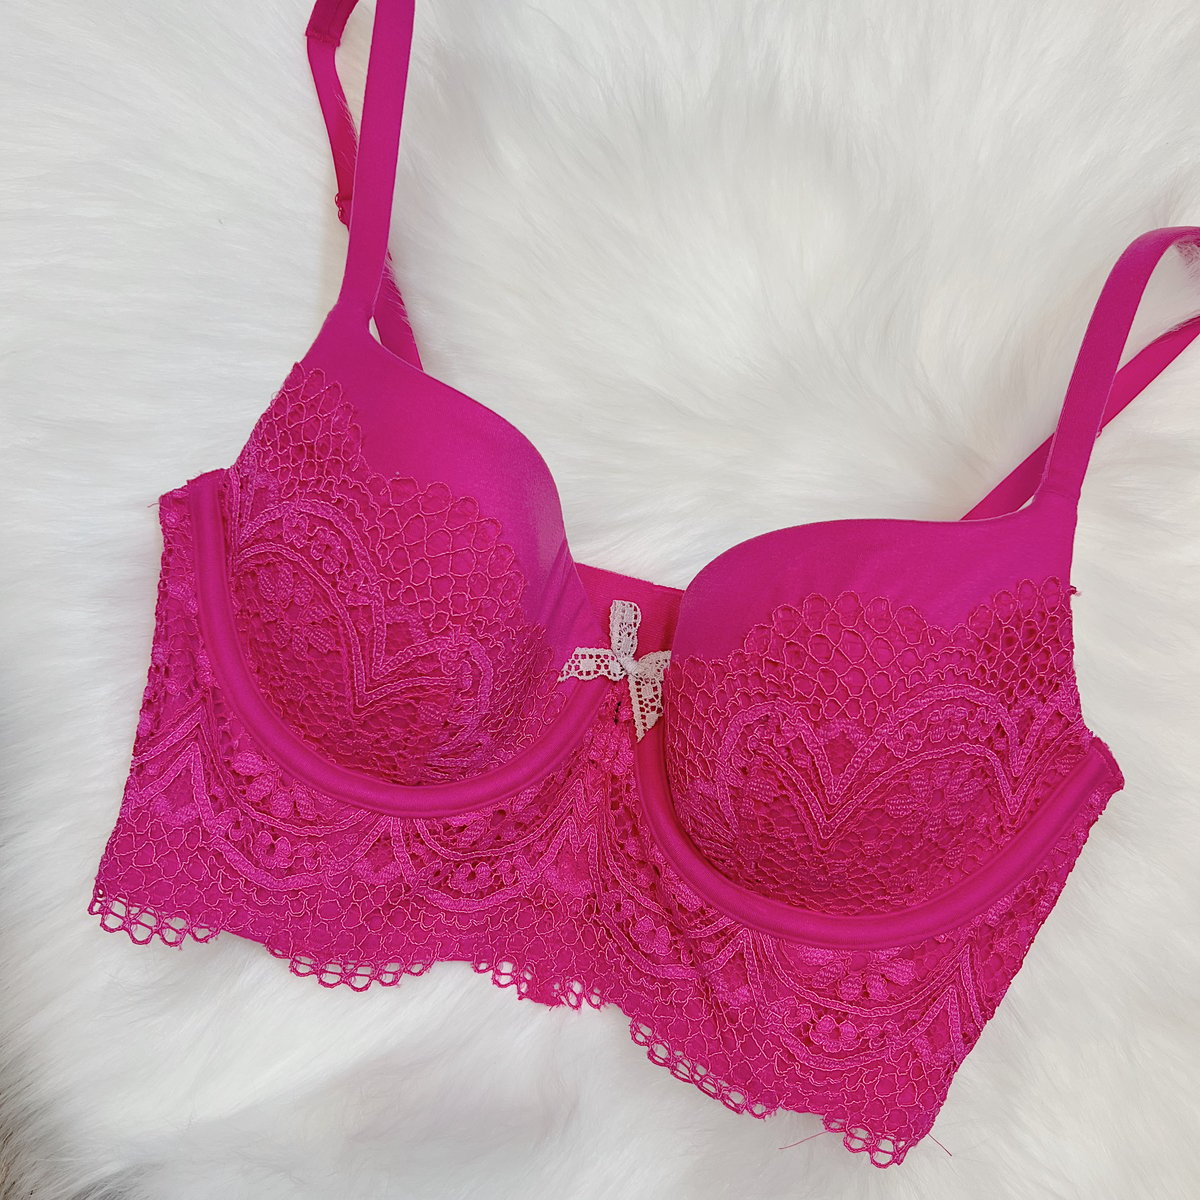 Victoria's Secret perfect shape bra pink grey 34DD